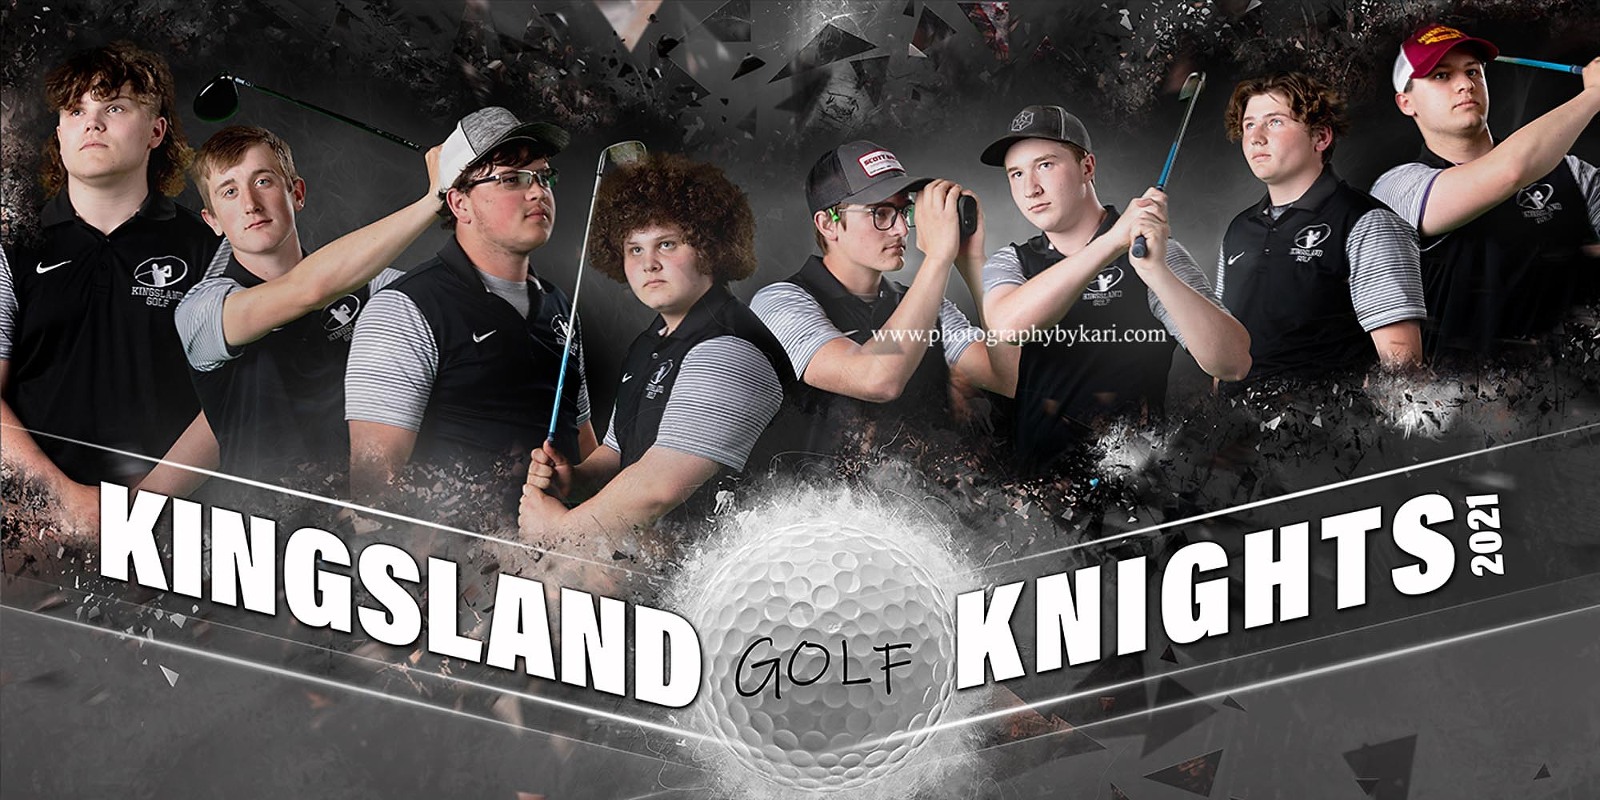 Kingsland Golf team poster 2021